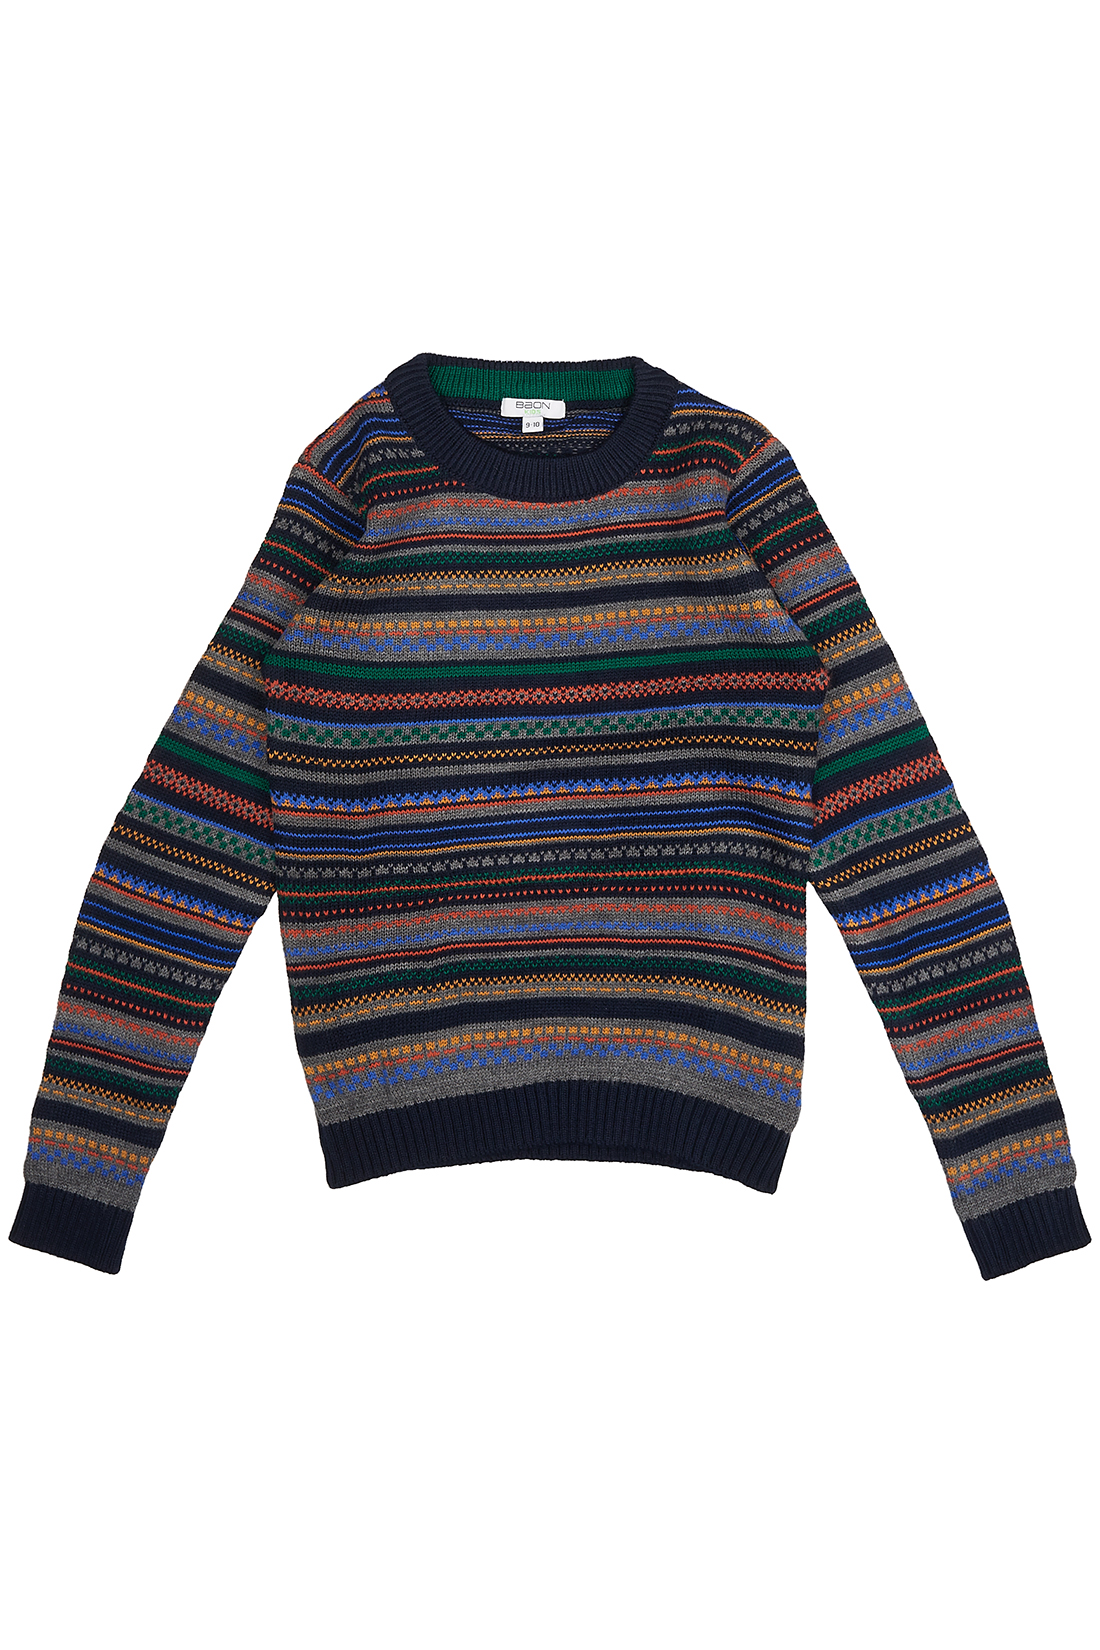 Джемпер для мальчика (арт. baon BJ638504), размер 146-152, цвет multicolor#многоцветный